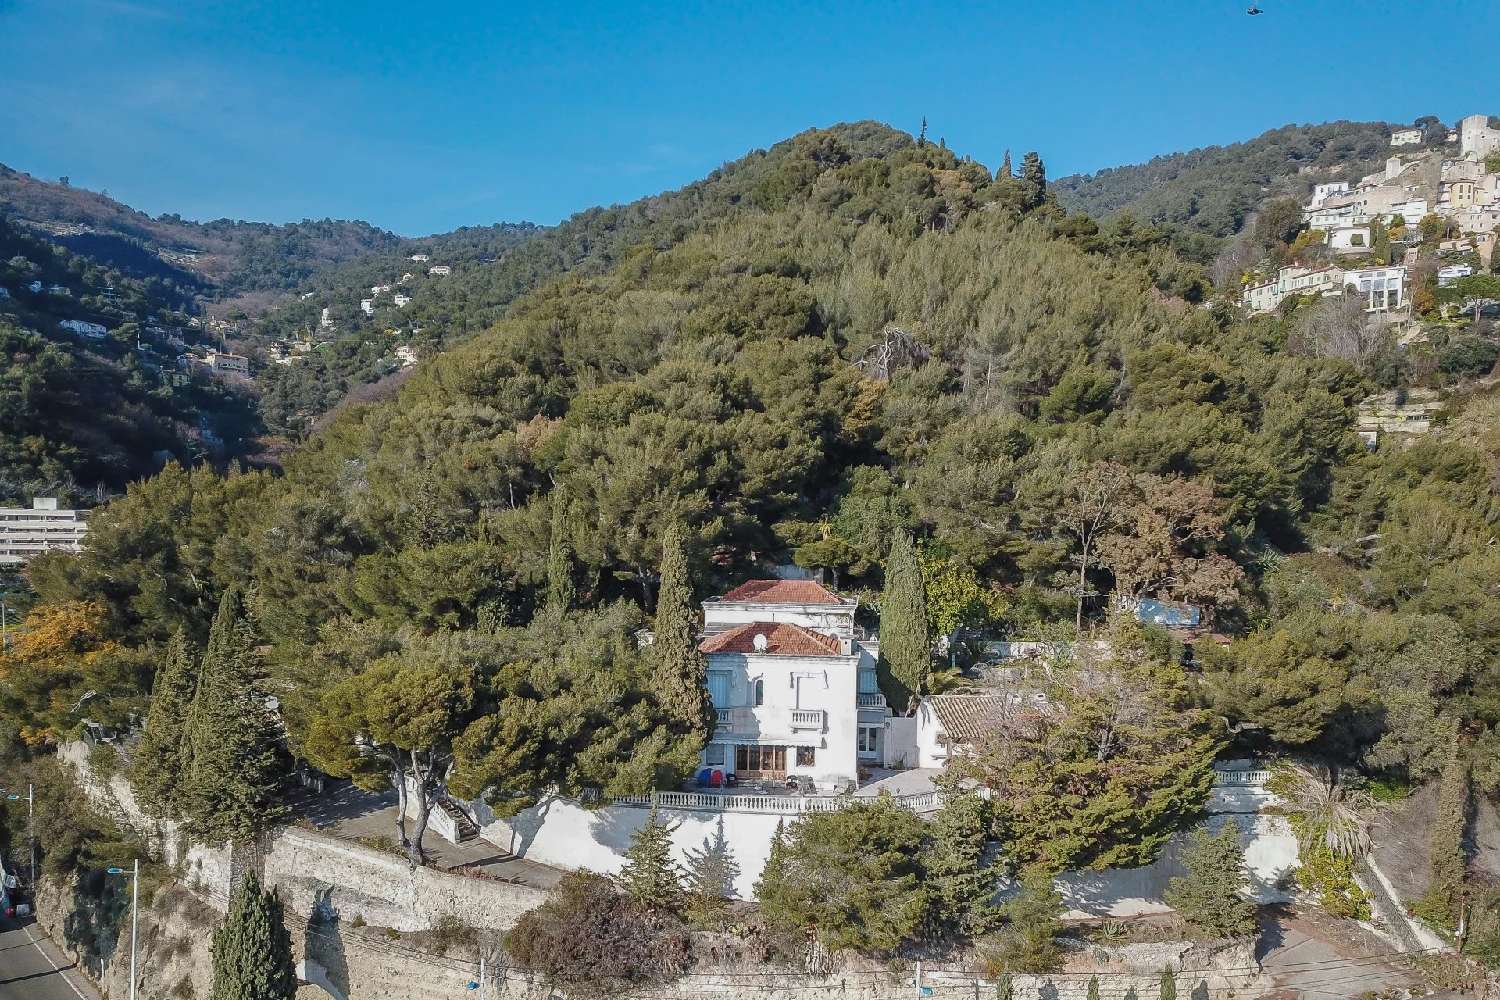  à vendre villa Roquebrune-Cap-Martin Alpes-Maritimes 1